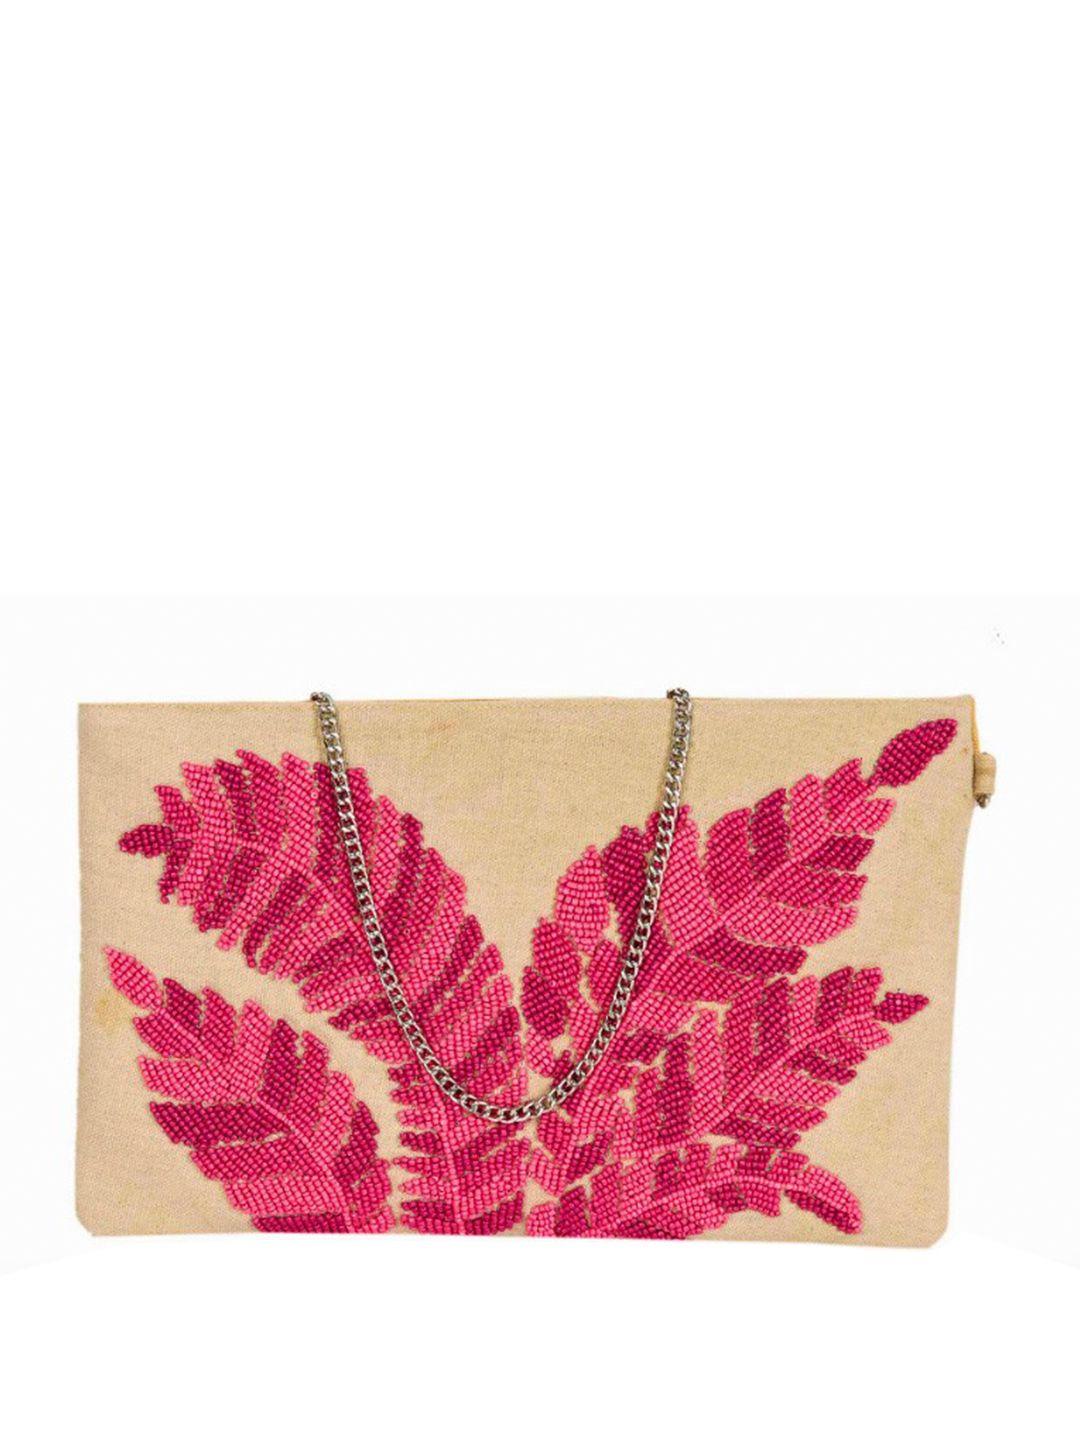 rezzy embellished purse clutch